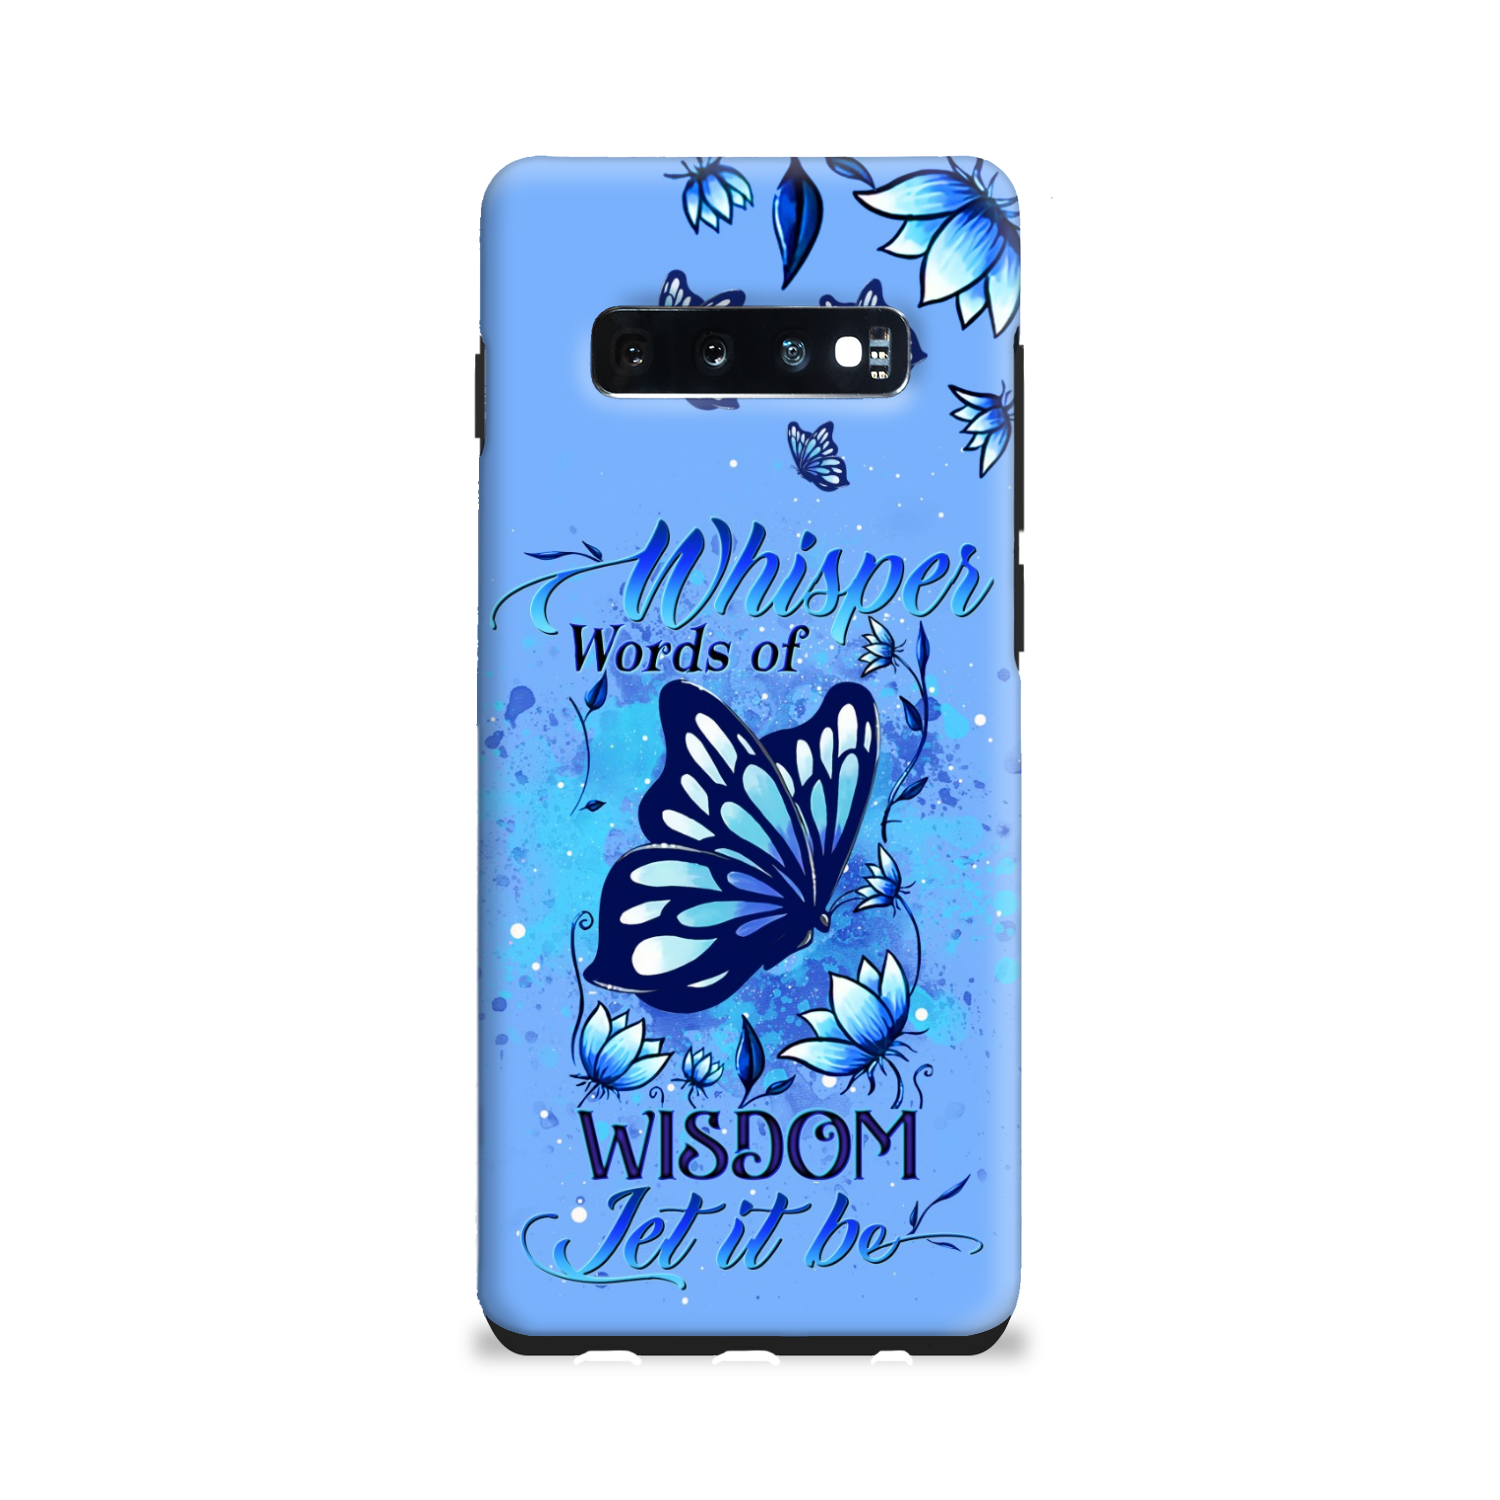 WHISPER WORDS OF WISDOM PHONE CASE - YHDU1905235